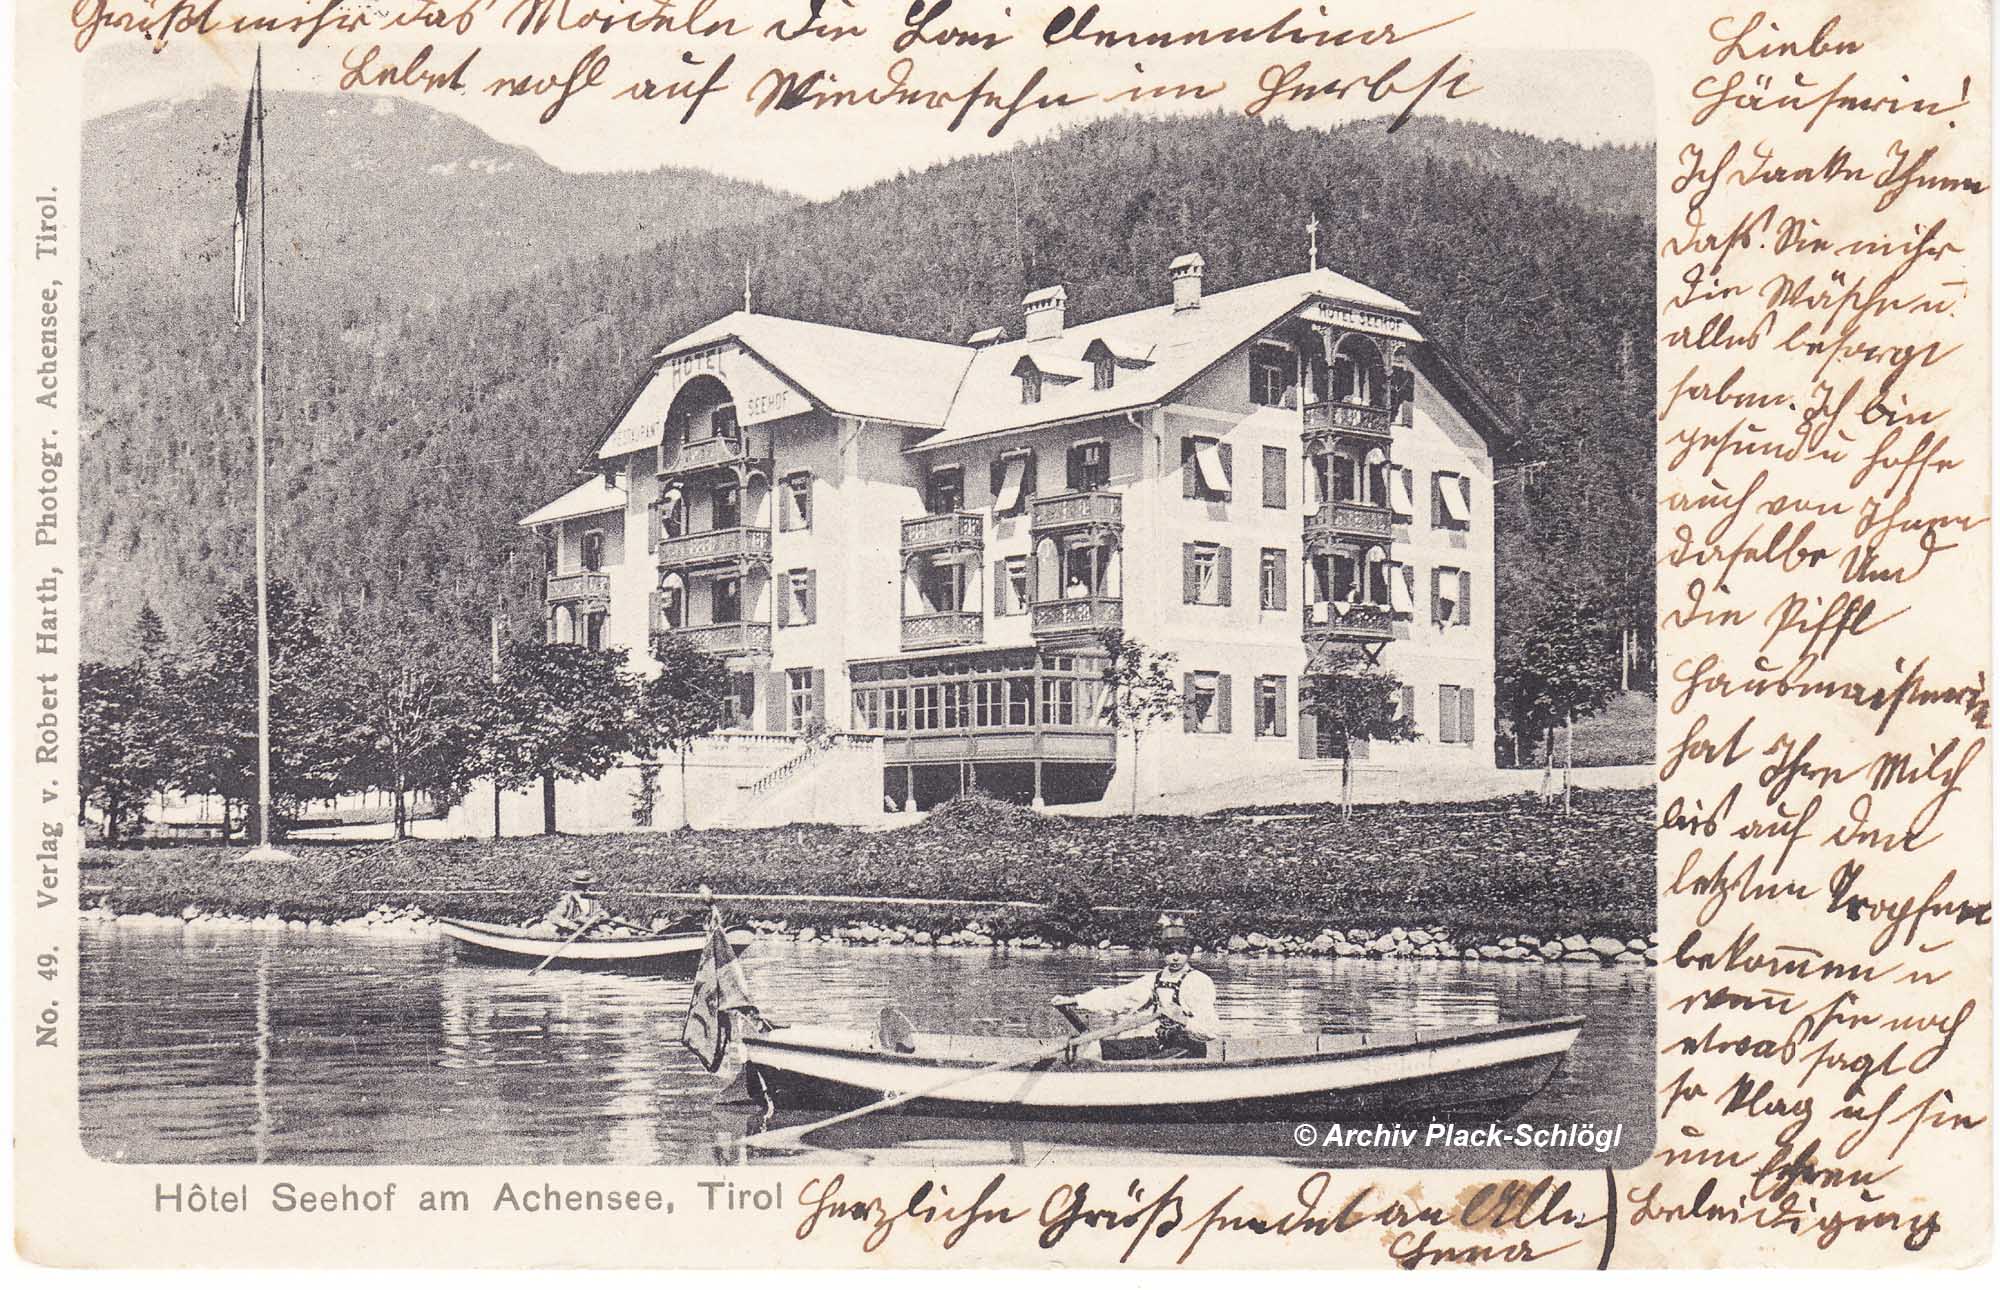 Hotel Seehof am Achensee, Tirol